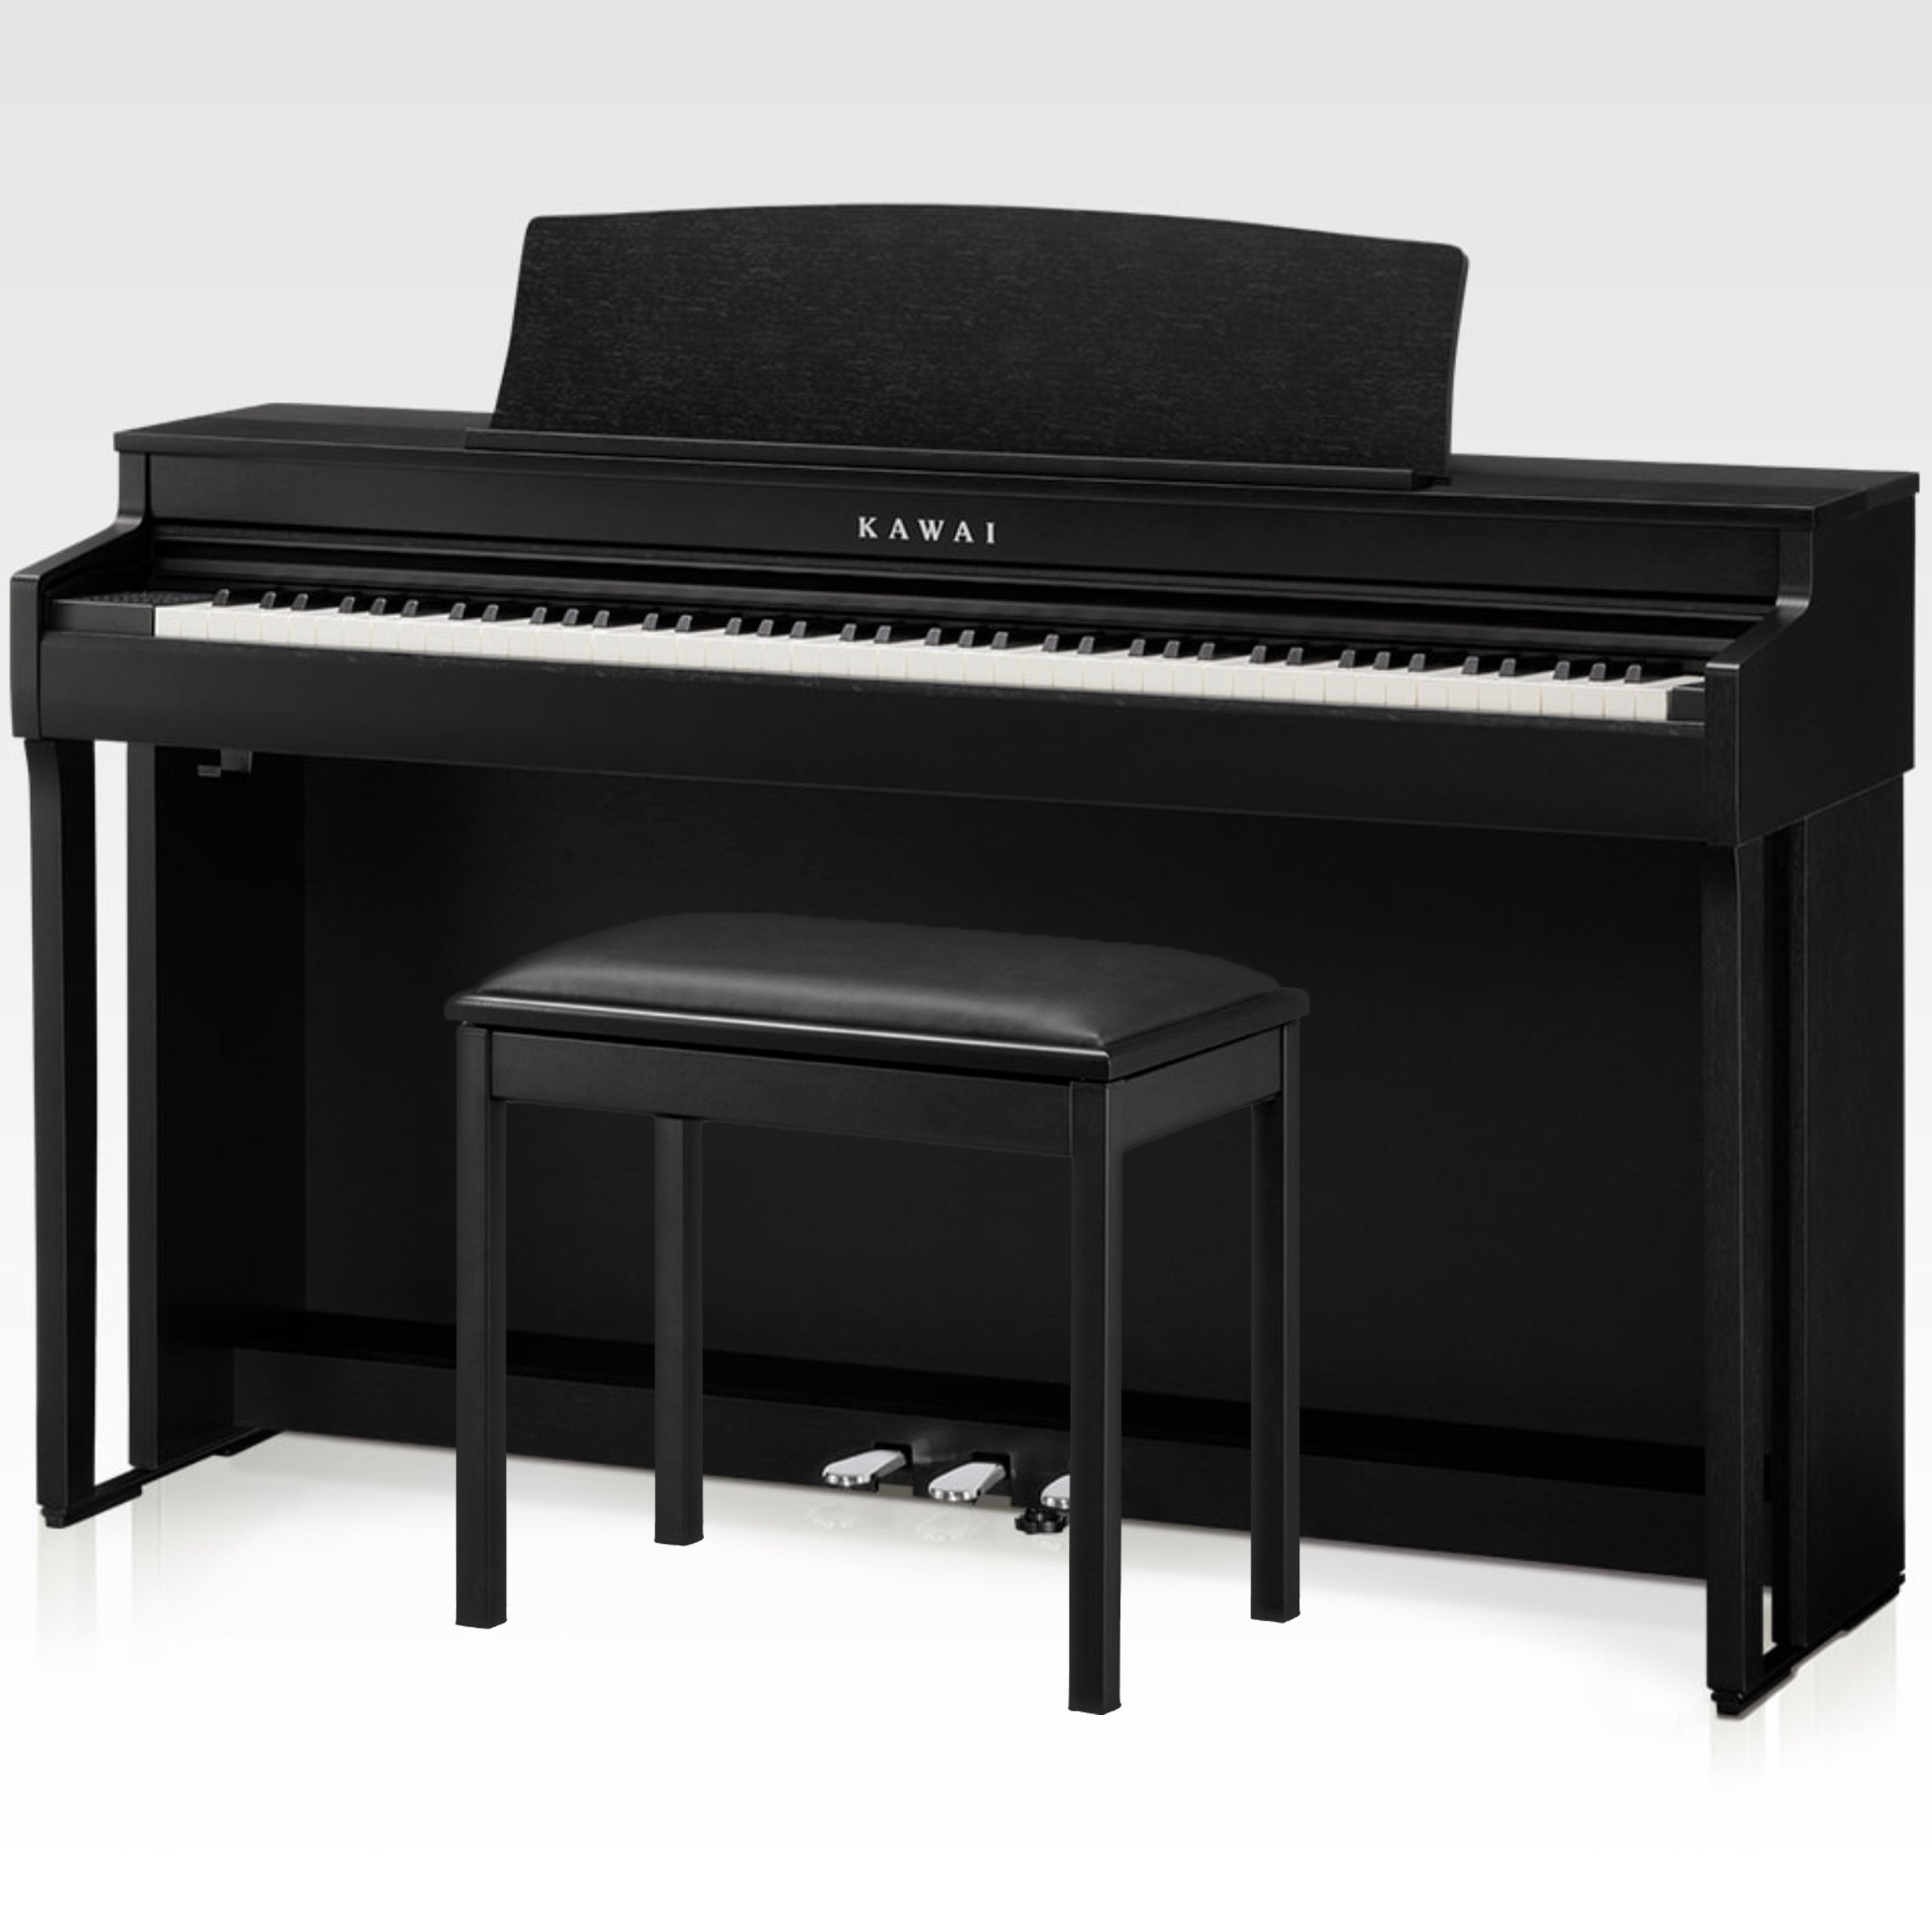 Kawai CN301 Digital Piano - Satin Black - Left angle with bench